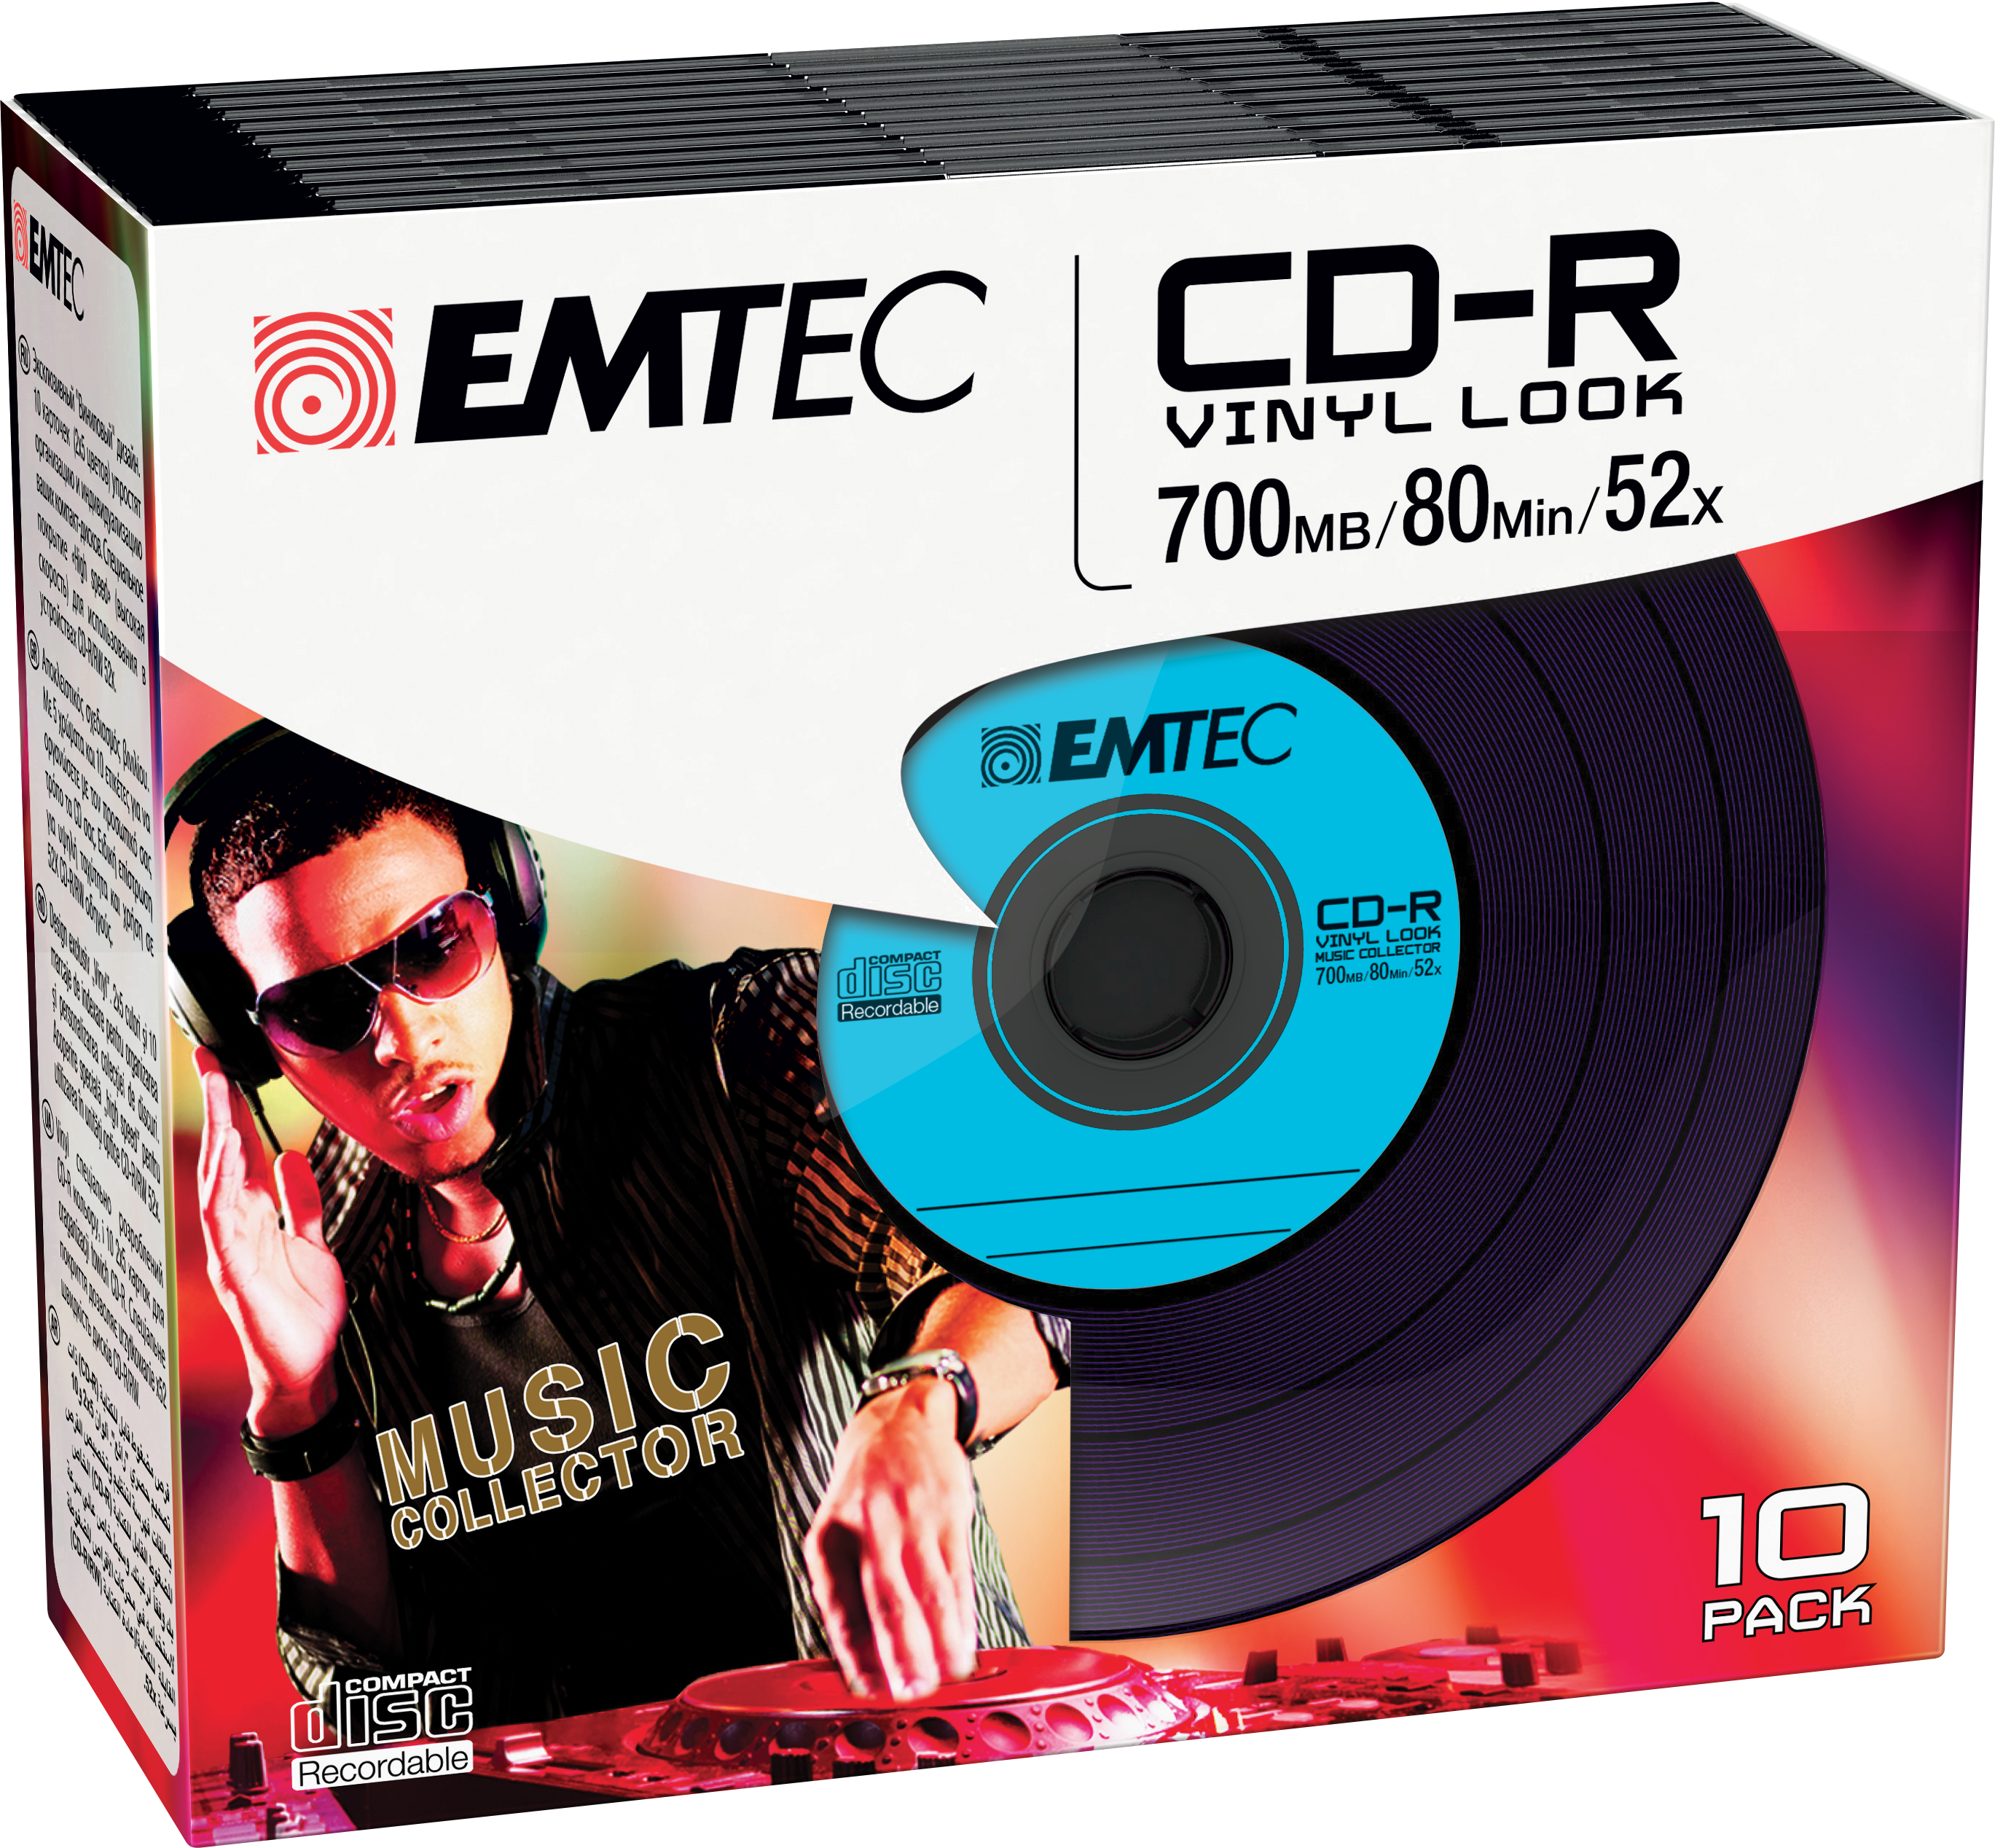 Emtec CD-R Vinyl Look